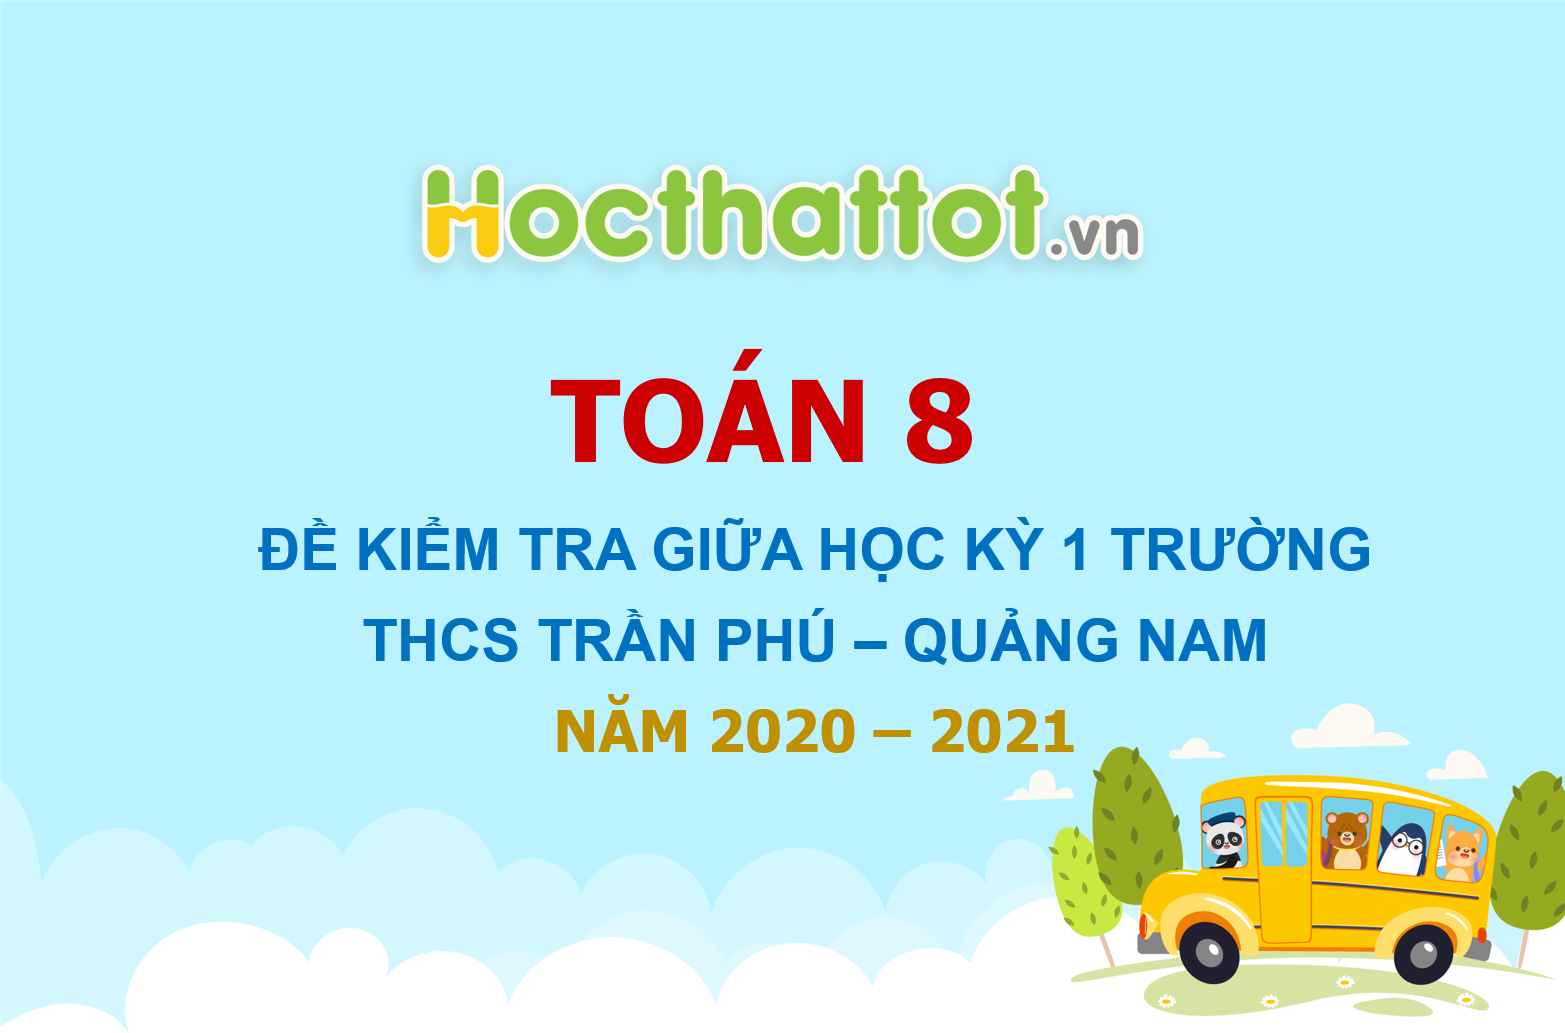 de-kiem-tra-giua-hoc-ky-1-toan-8-nam-2020-2021-truong-thcs-tran-phu-quang-nam (1)